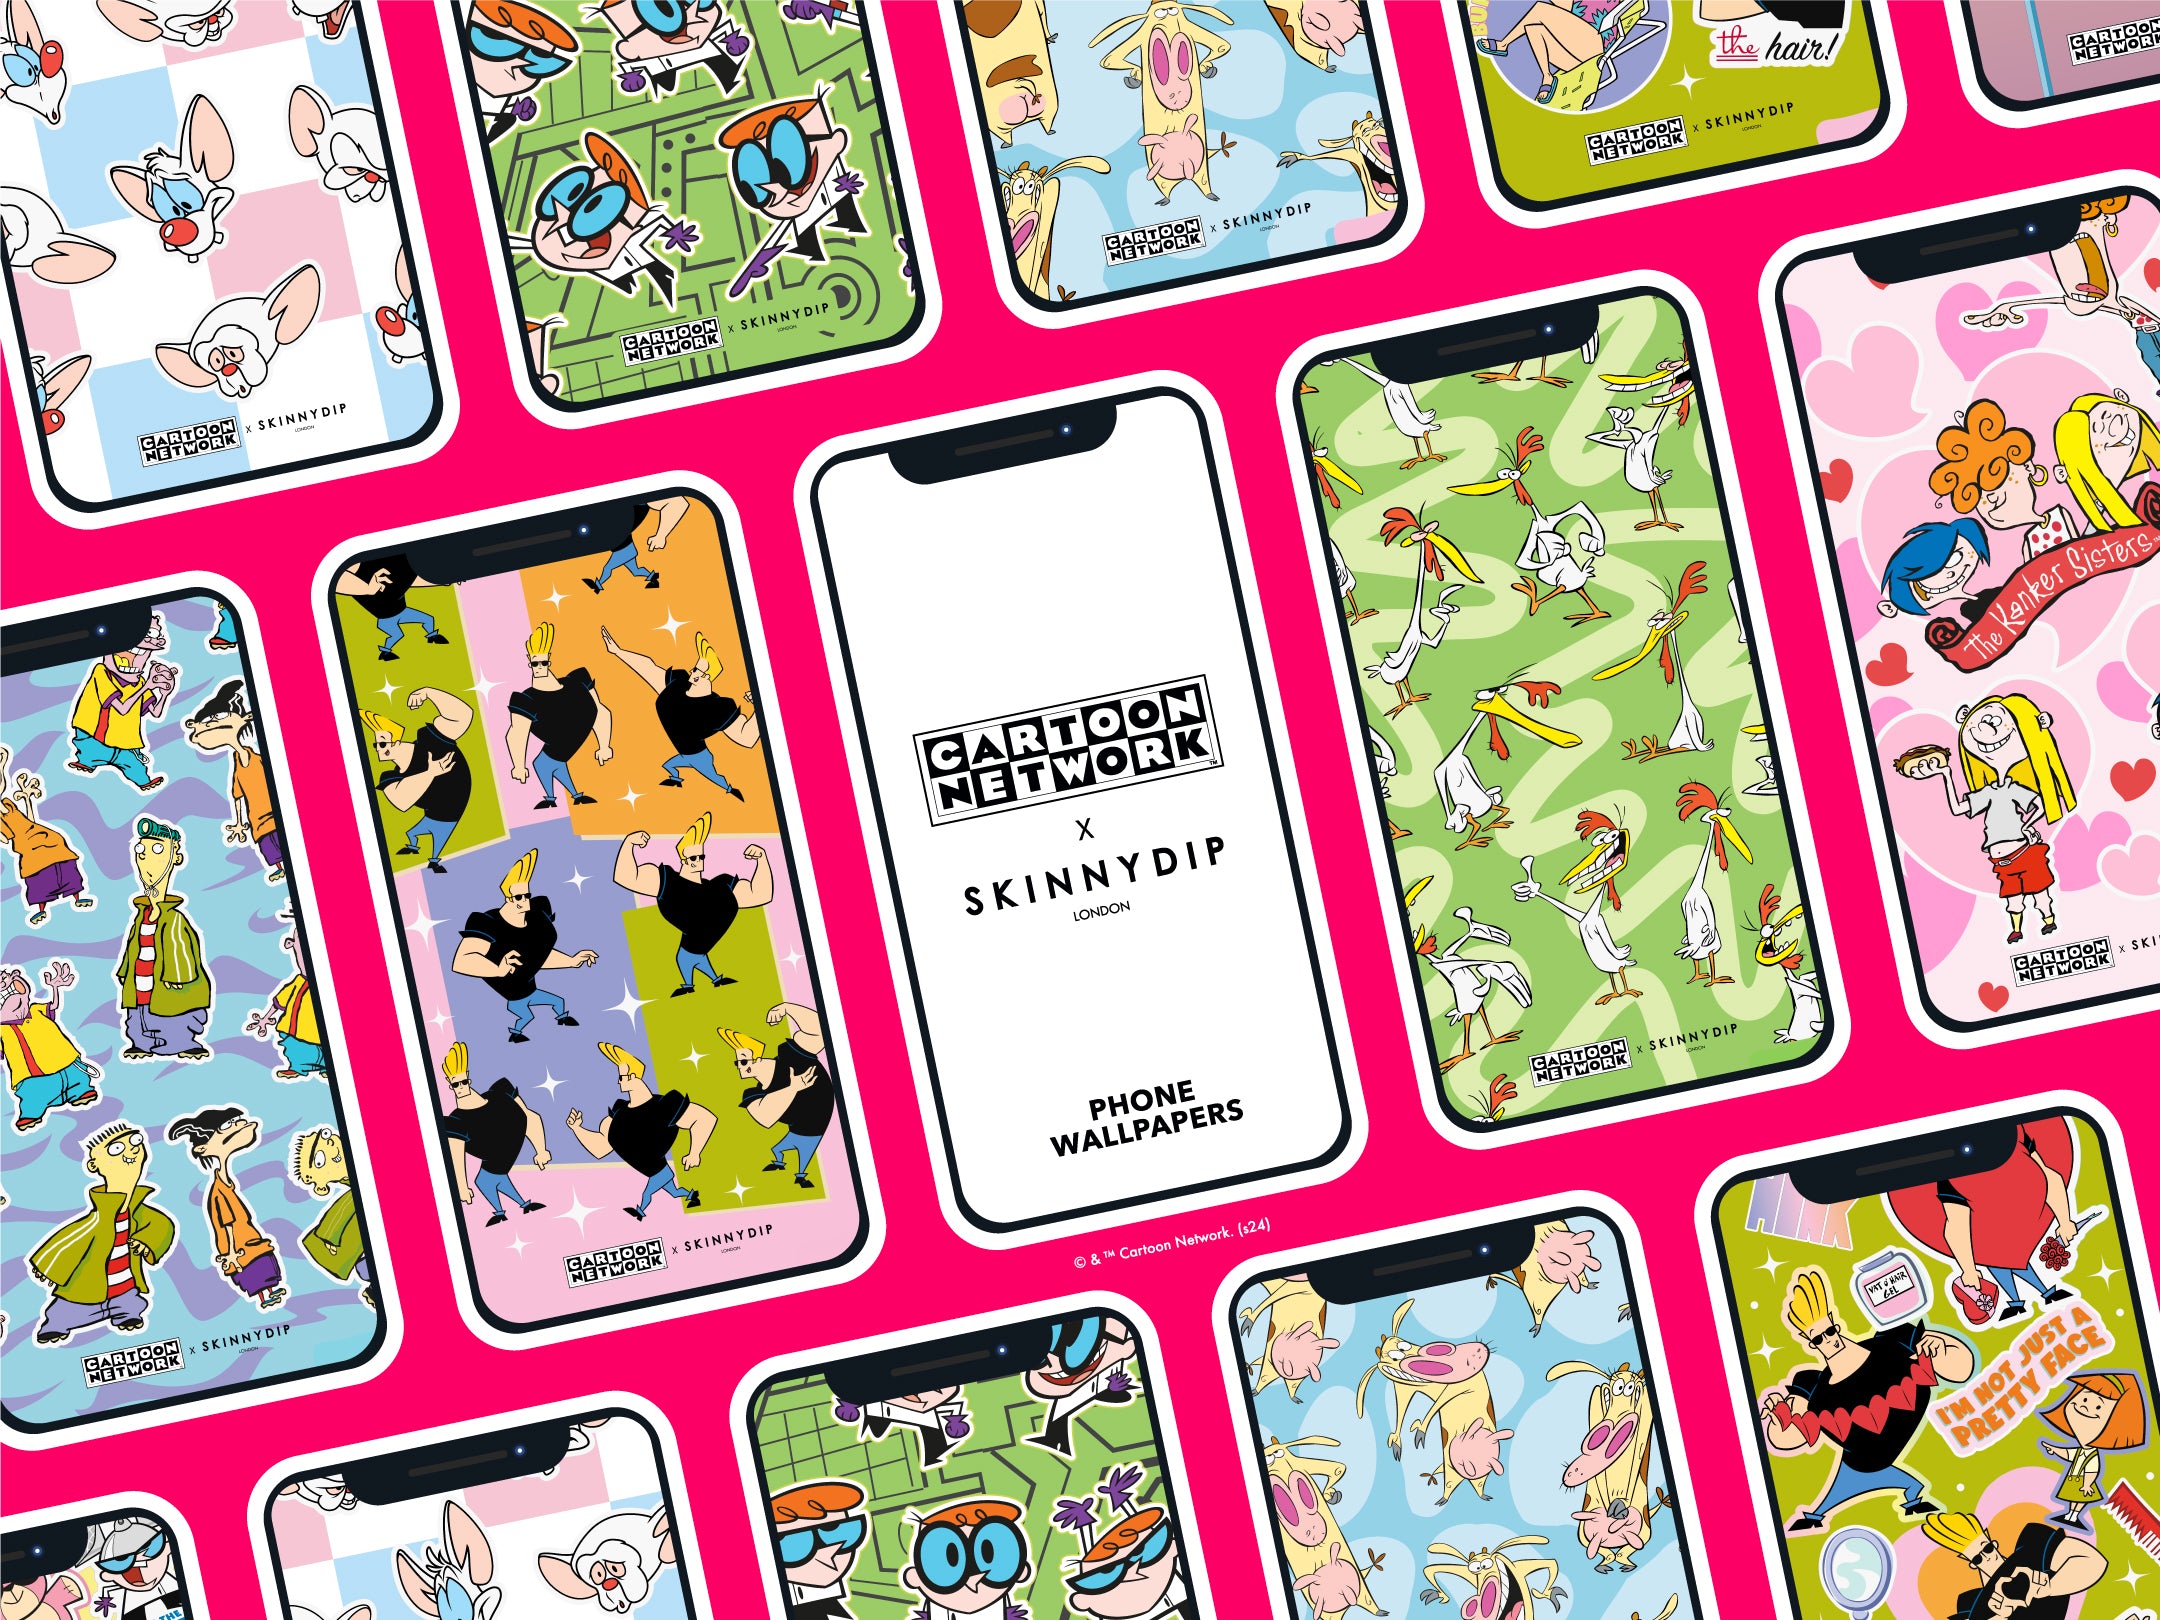 Cartoon Network x Skinnydip Phone Wallpapers